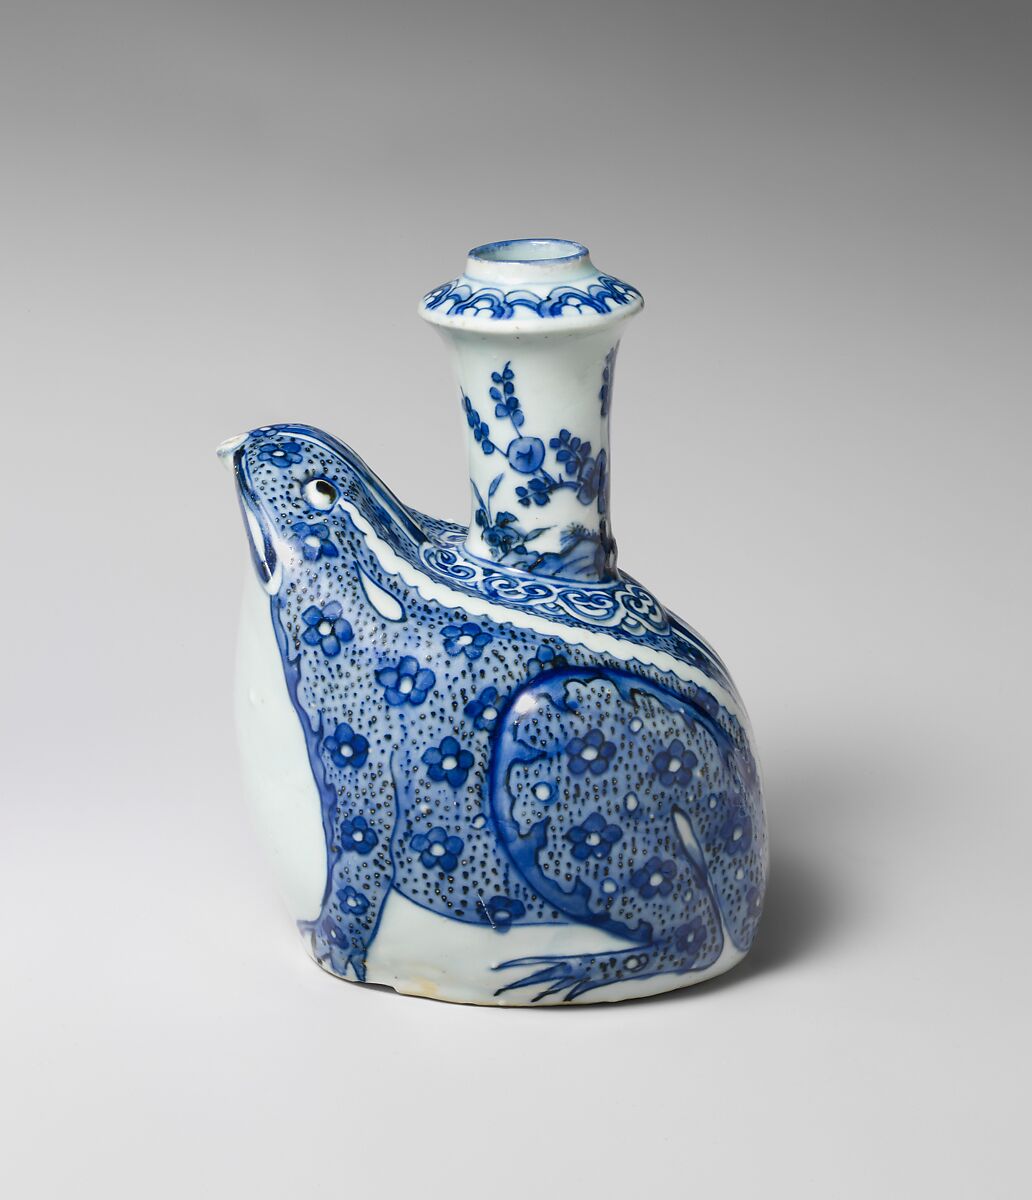 Frog-Shaped Pouring Vessel (Kendi), Porcelain painted with cobalt blue under transparent glaze (Jingdezhen ware), China 